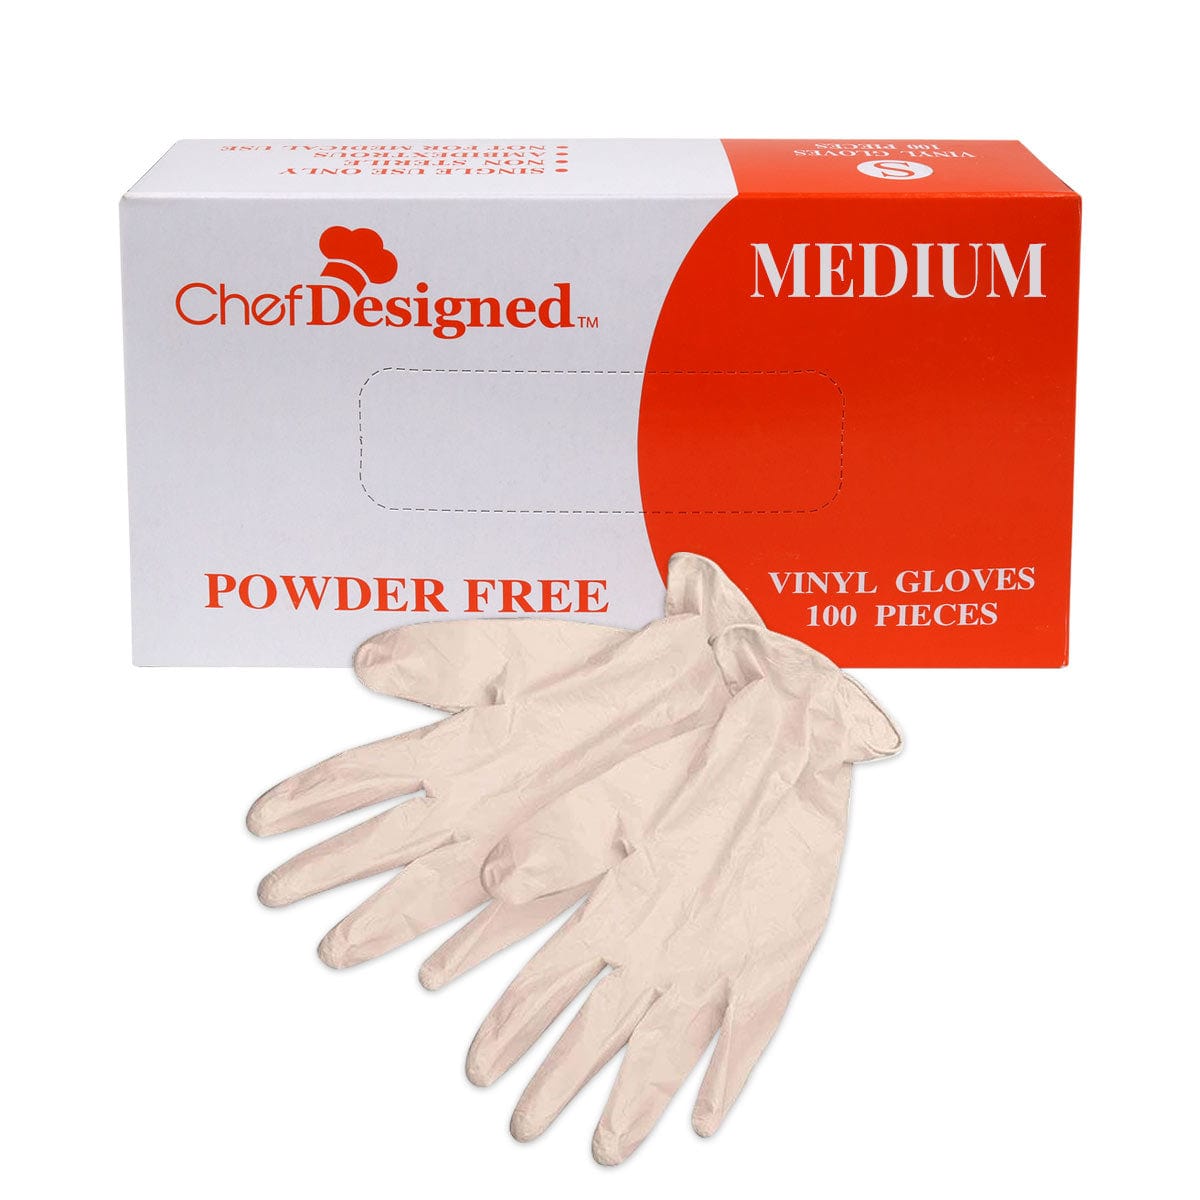 Vinyl Powder Free Disposable Gloves (100 Pieces)